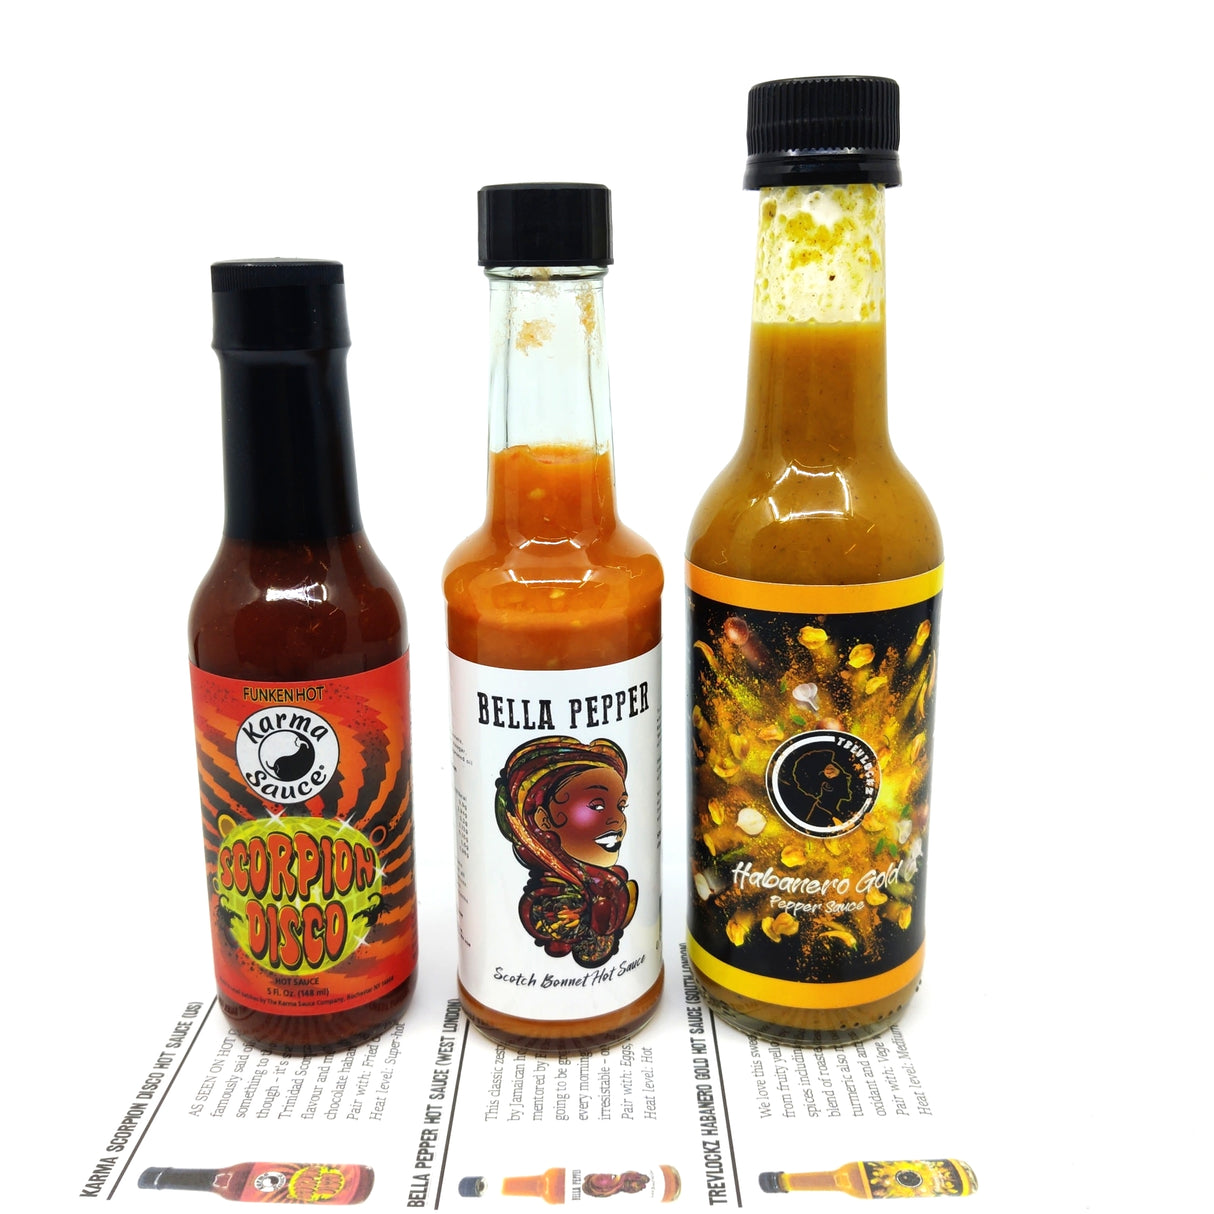 6 month quarterly (2 boxes) pre-paid - Burns Box GIFT hot sauce subscription-Hop Burns & Black